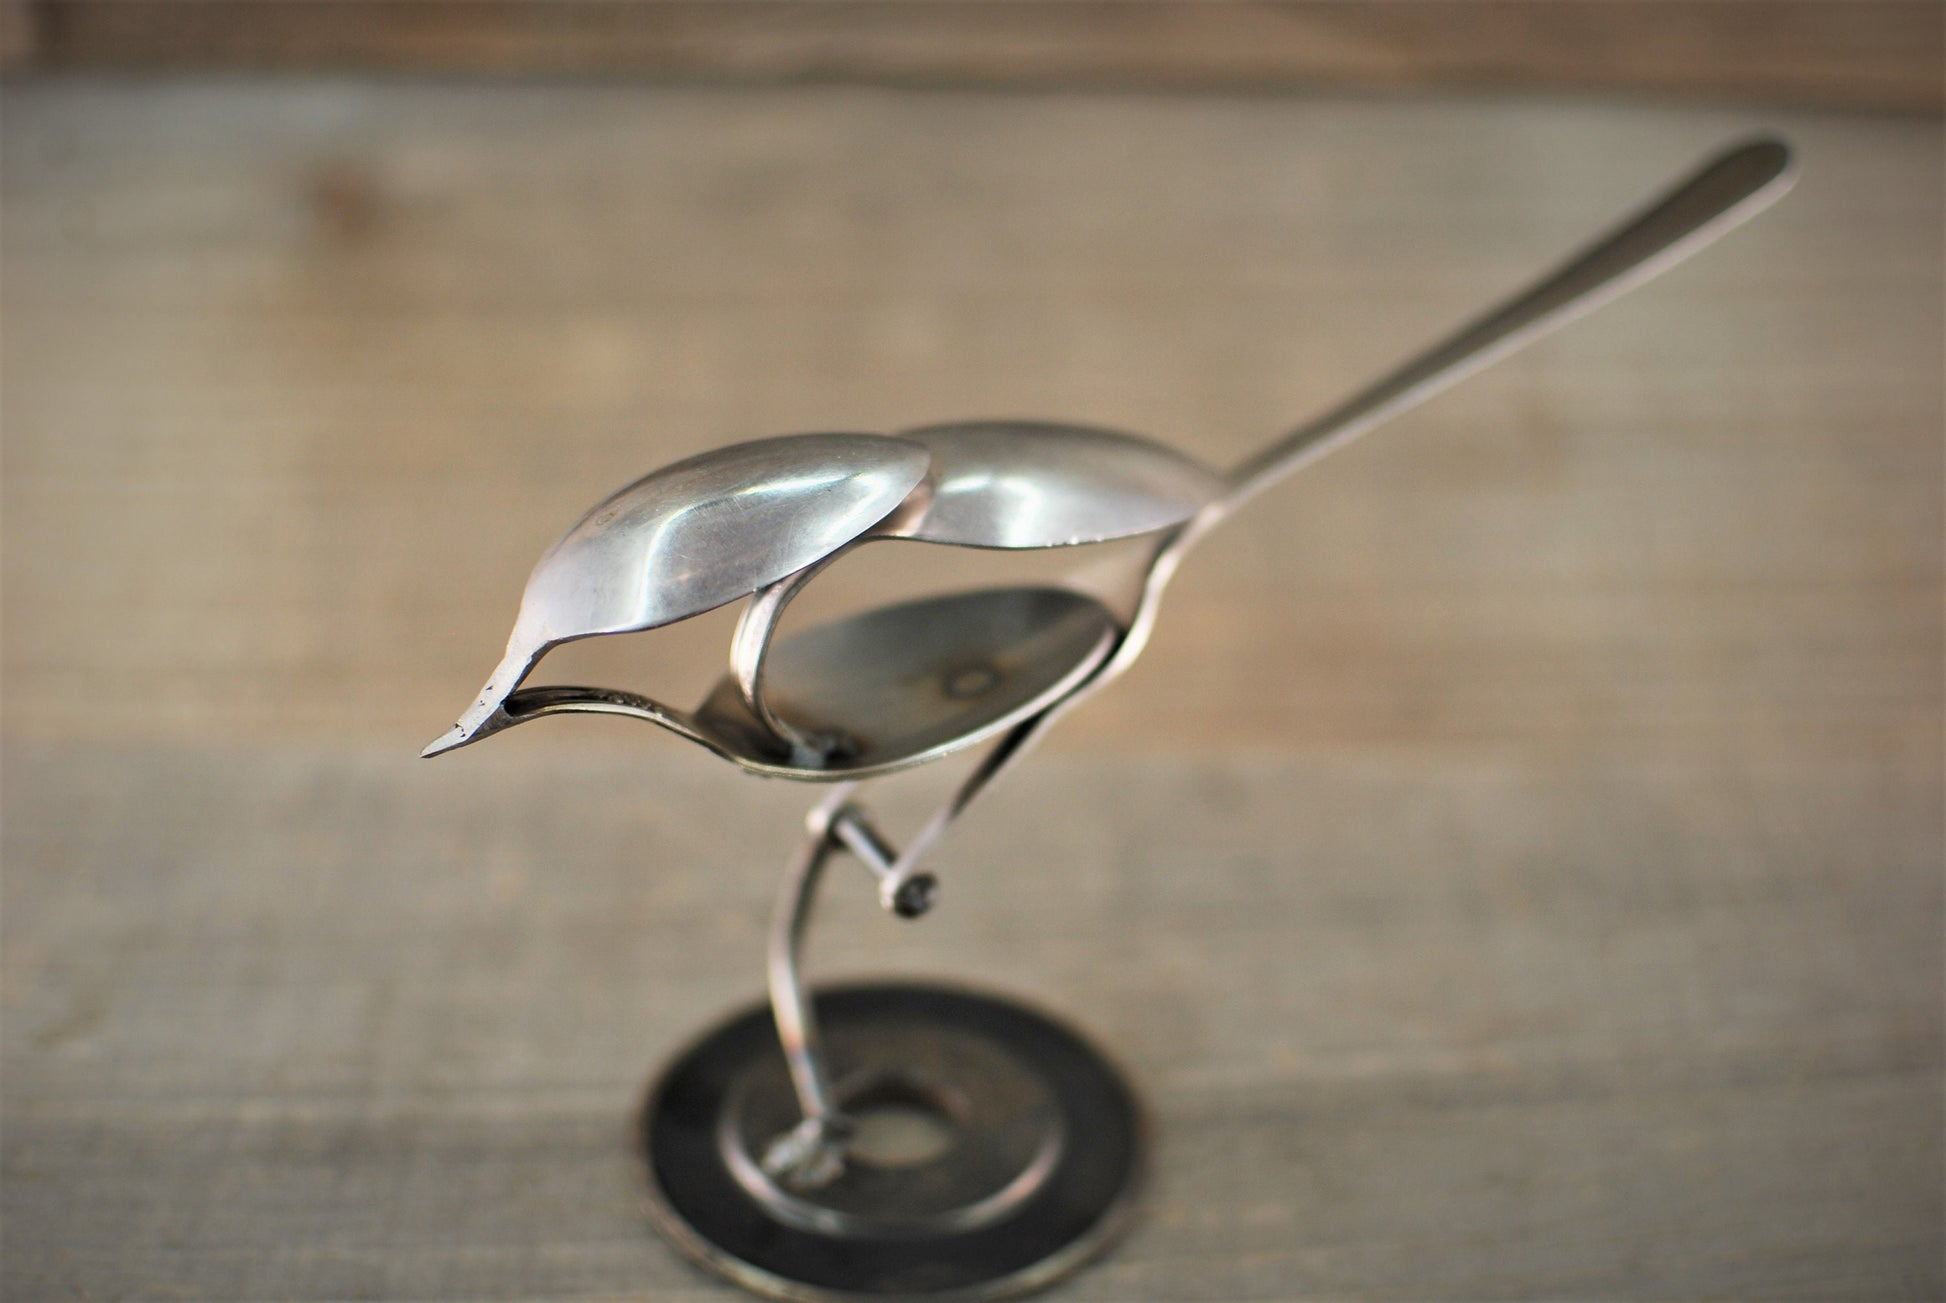 Silverware Bird, Spoon Bird, Silverware Art, Spoon Art, Metal Bird Sculpture, Bird Art, Gift for Bird Lover, Desk Art, Minimalist Bird Art